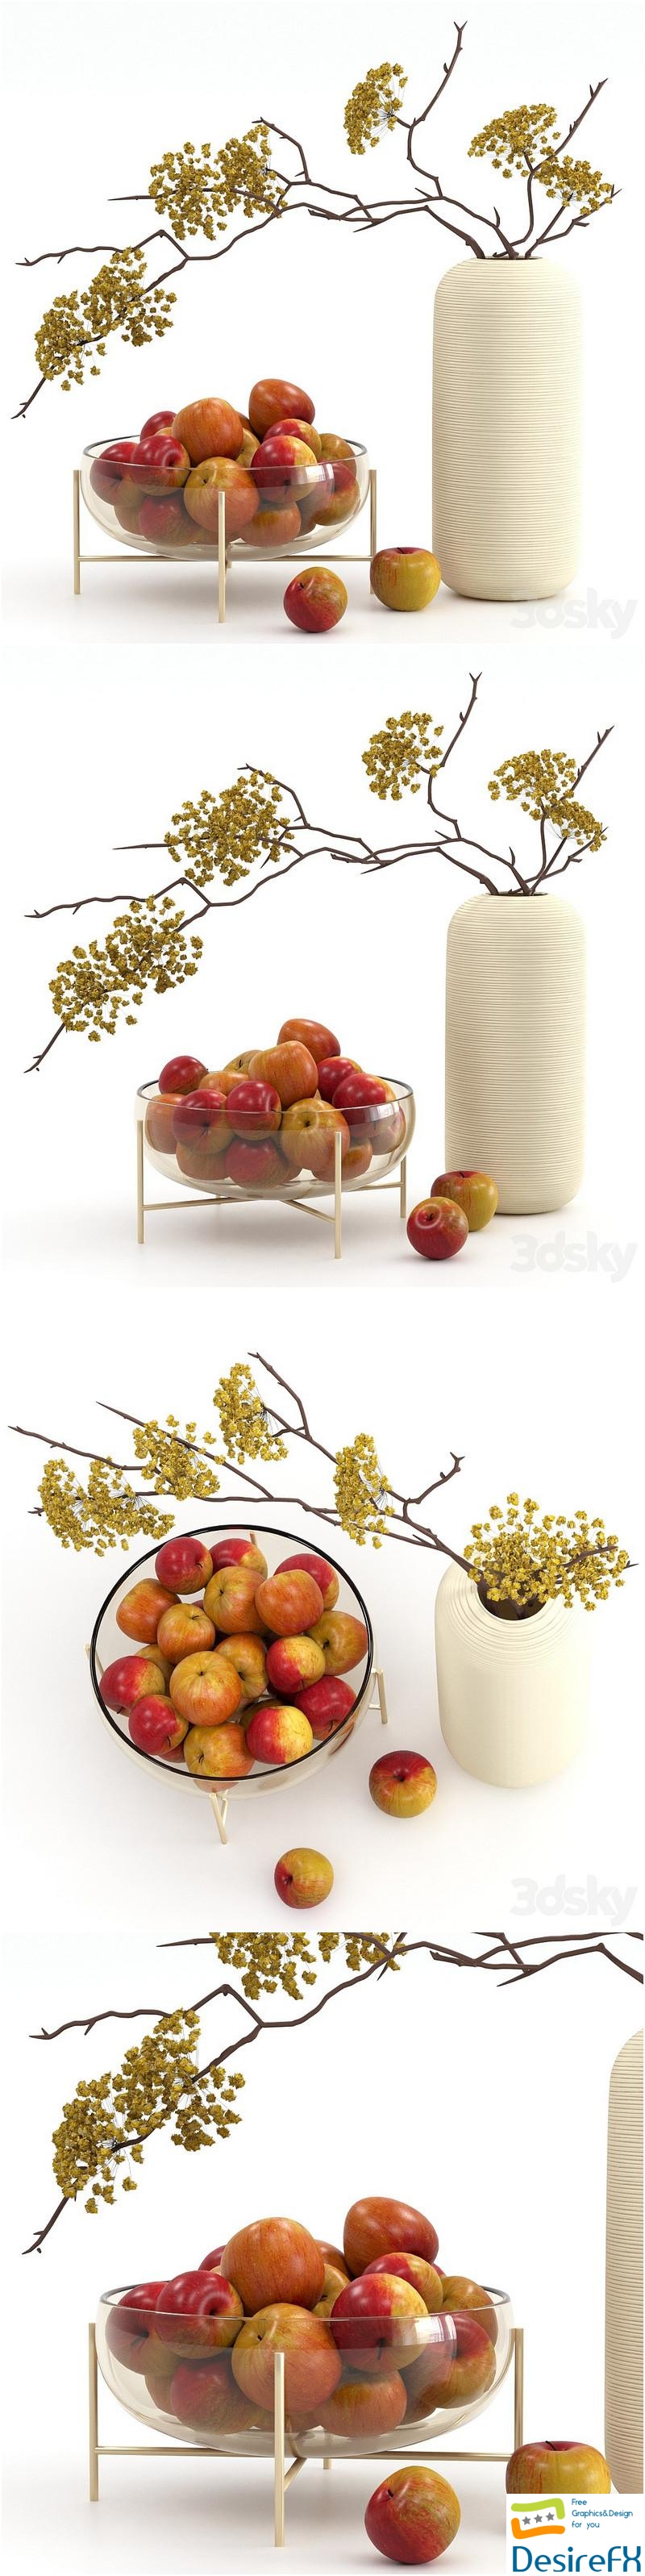 Vase with apples 3D Model